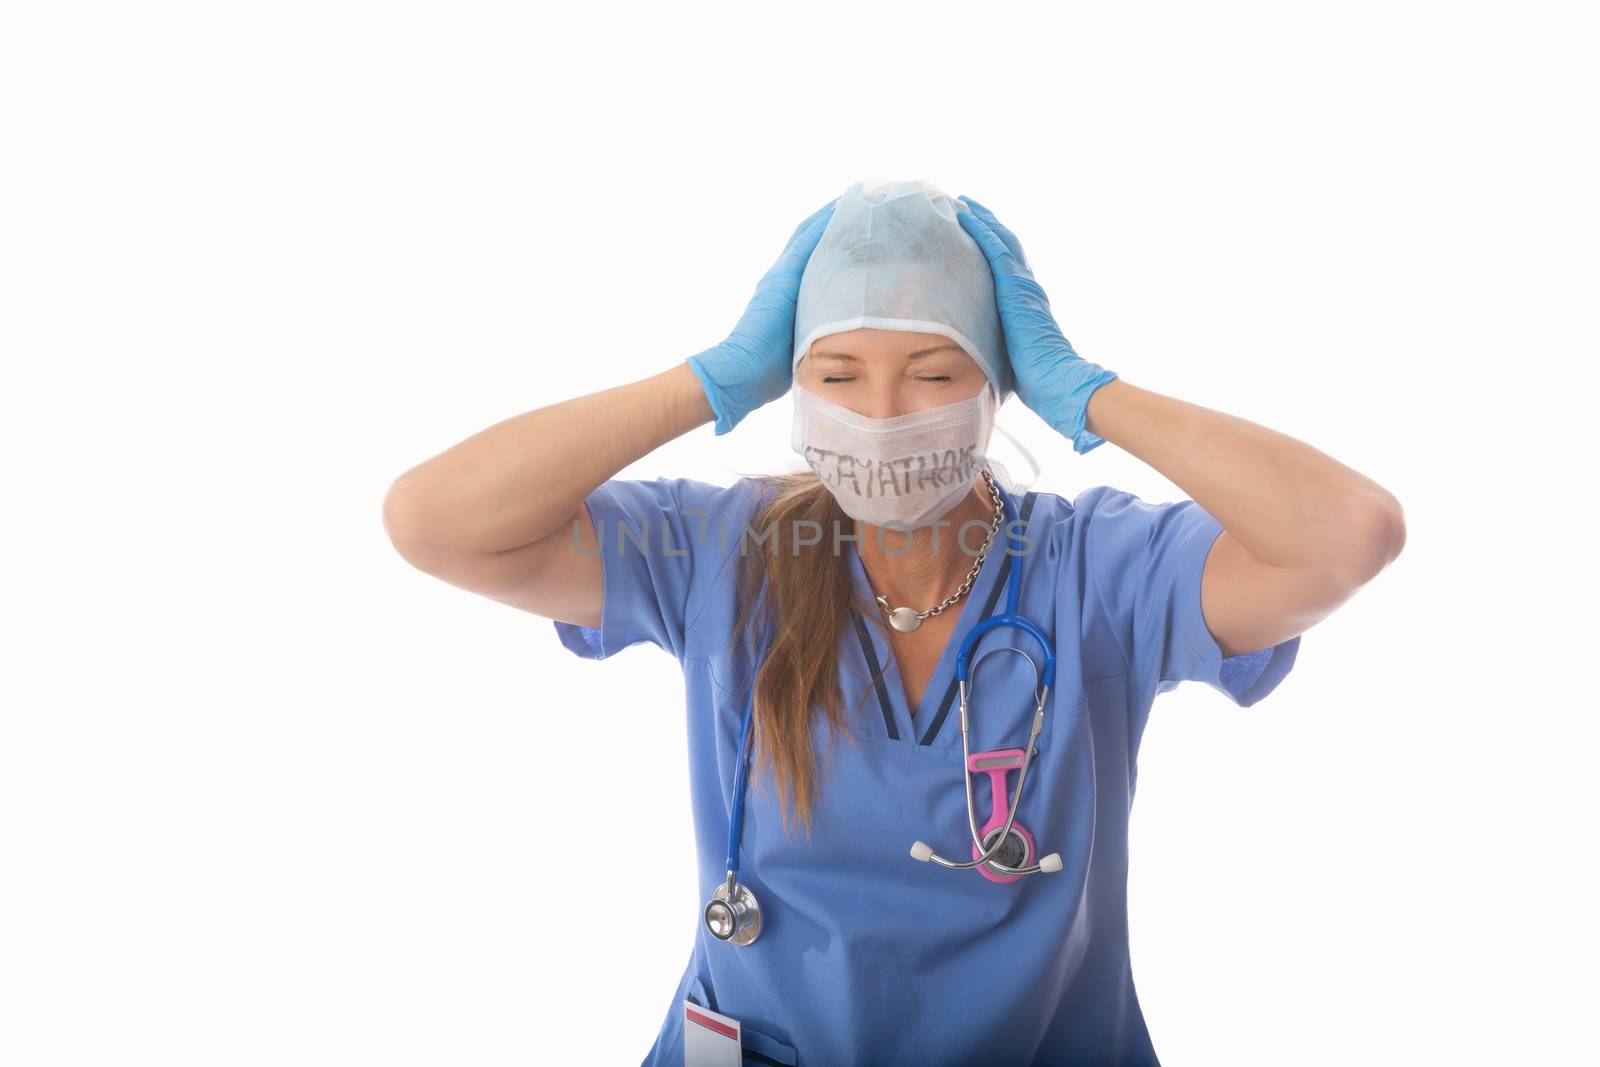 Frustrated or overworked hospital nurse